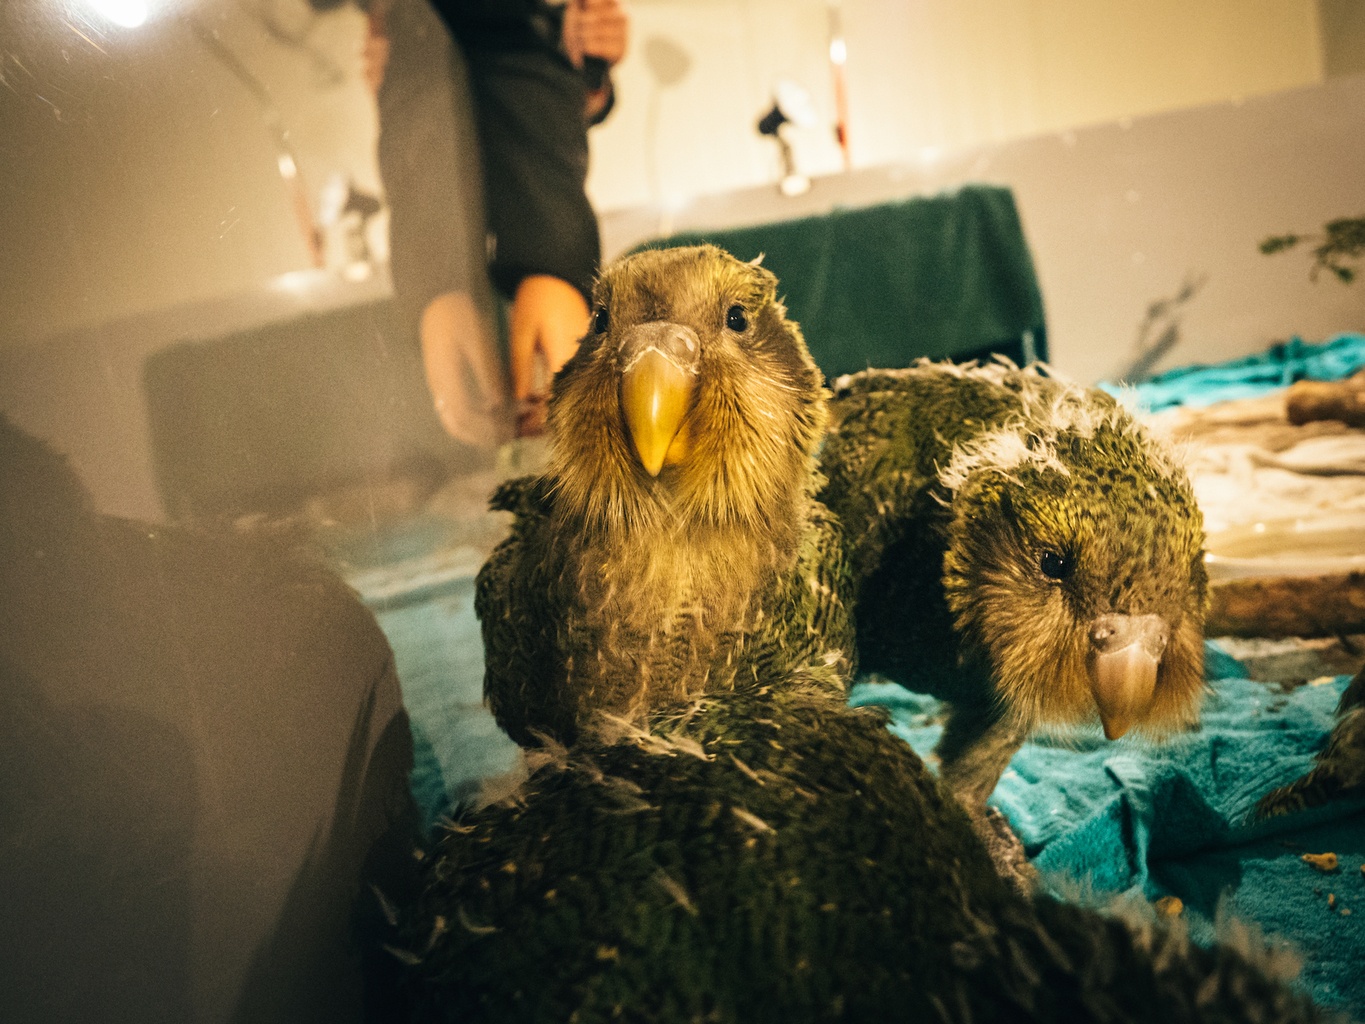 kakapo chicks